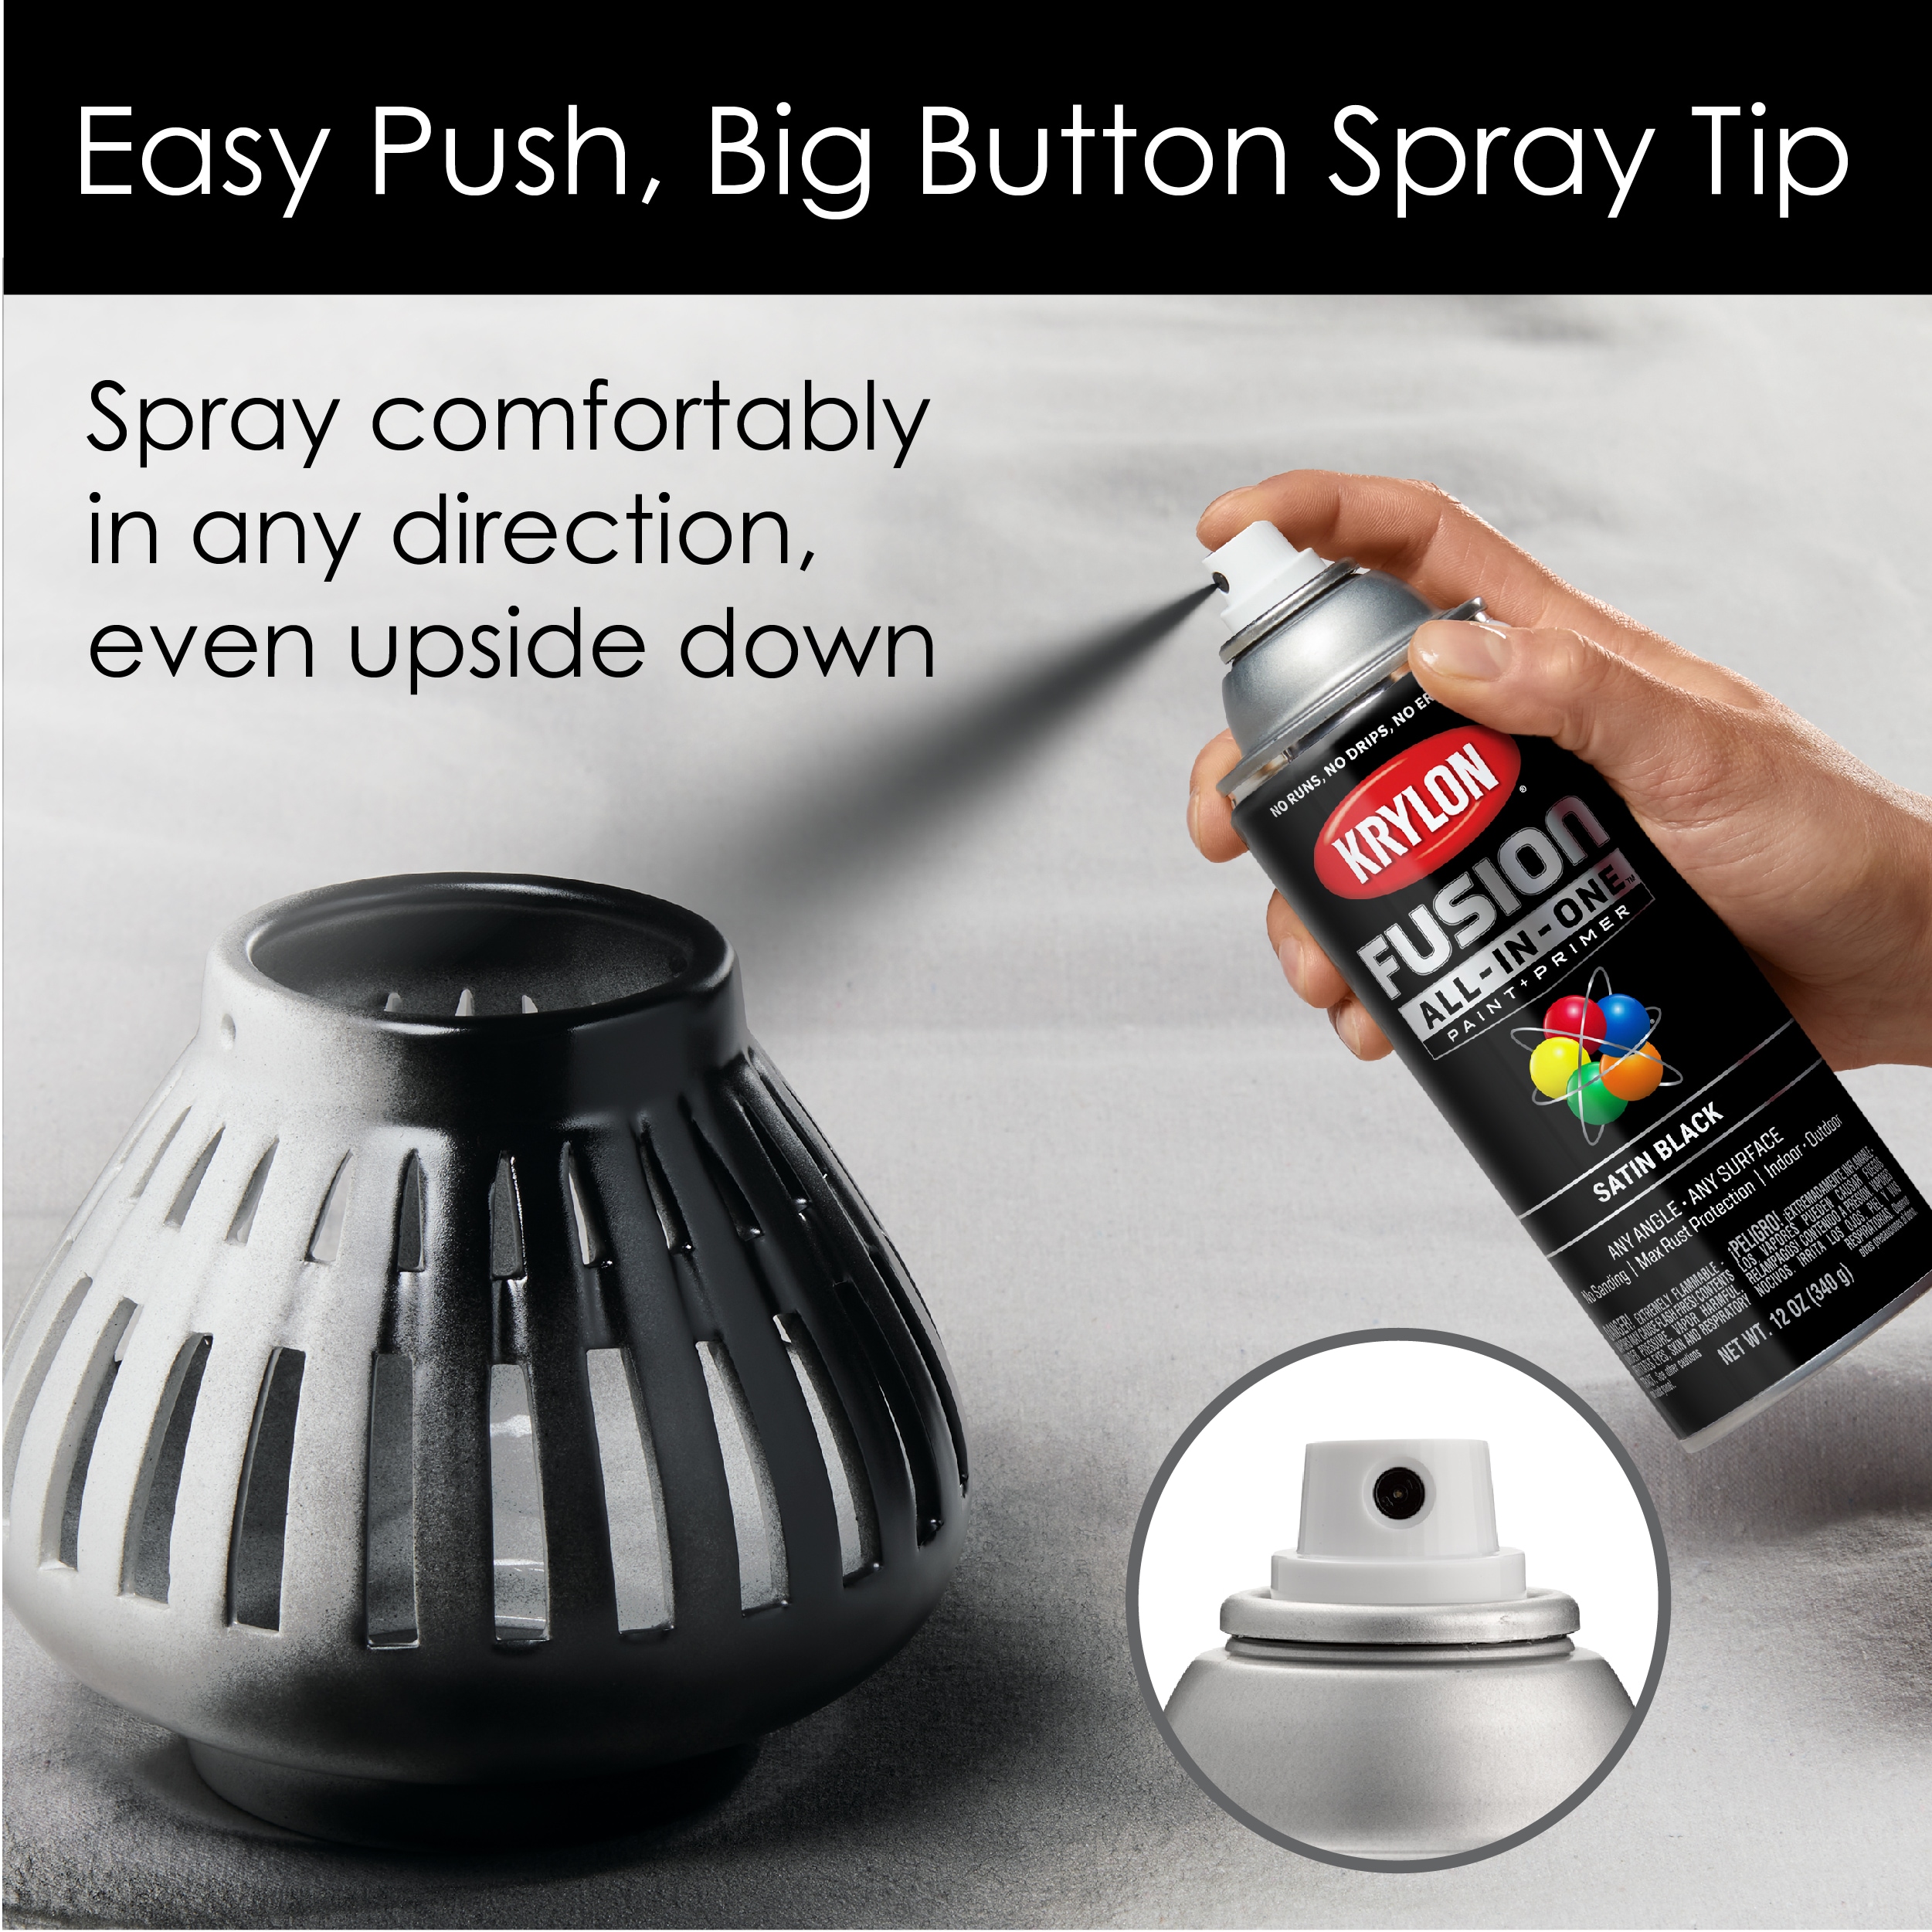 Krylon Satin Black High Heat Spray Paint (NET WT. 12-oz) in the Spray Paint  department at